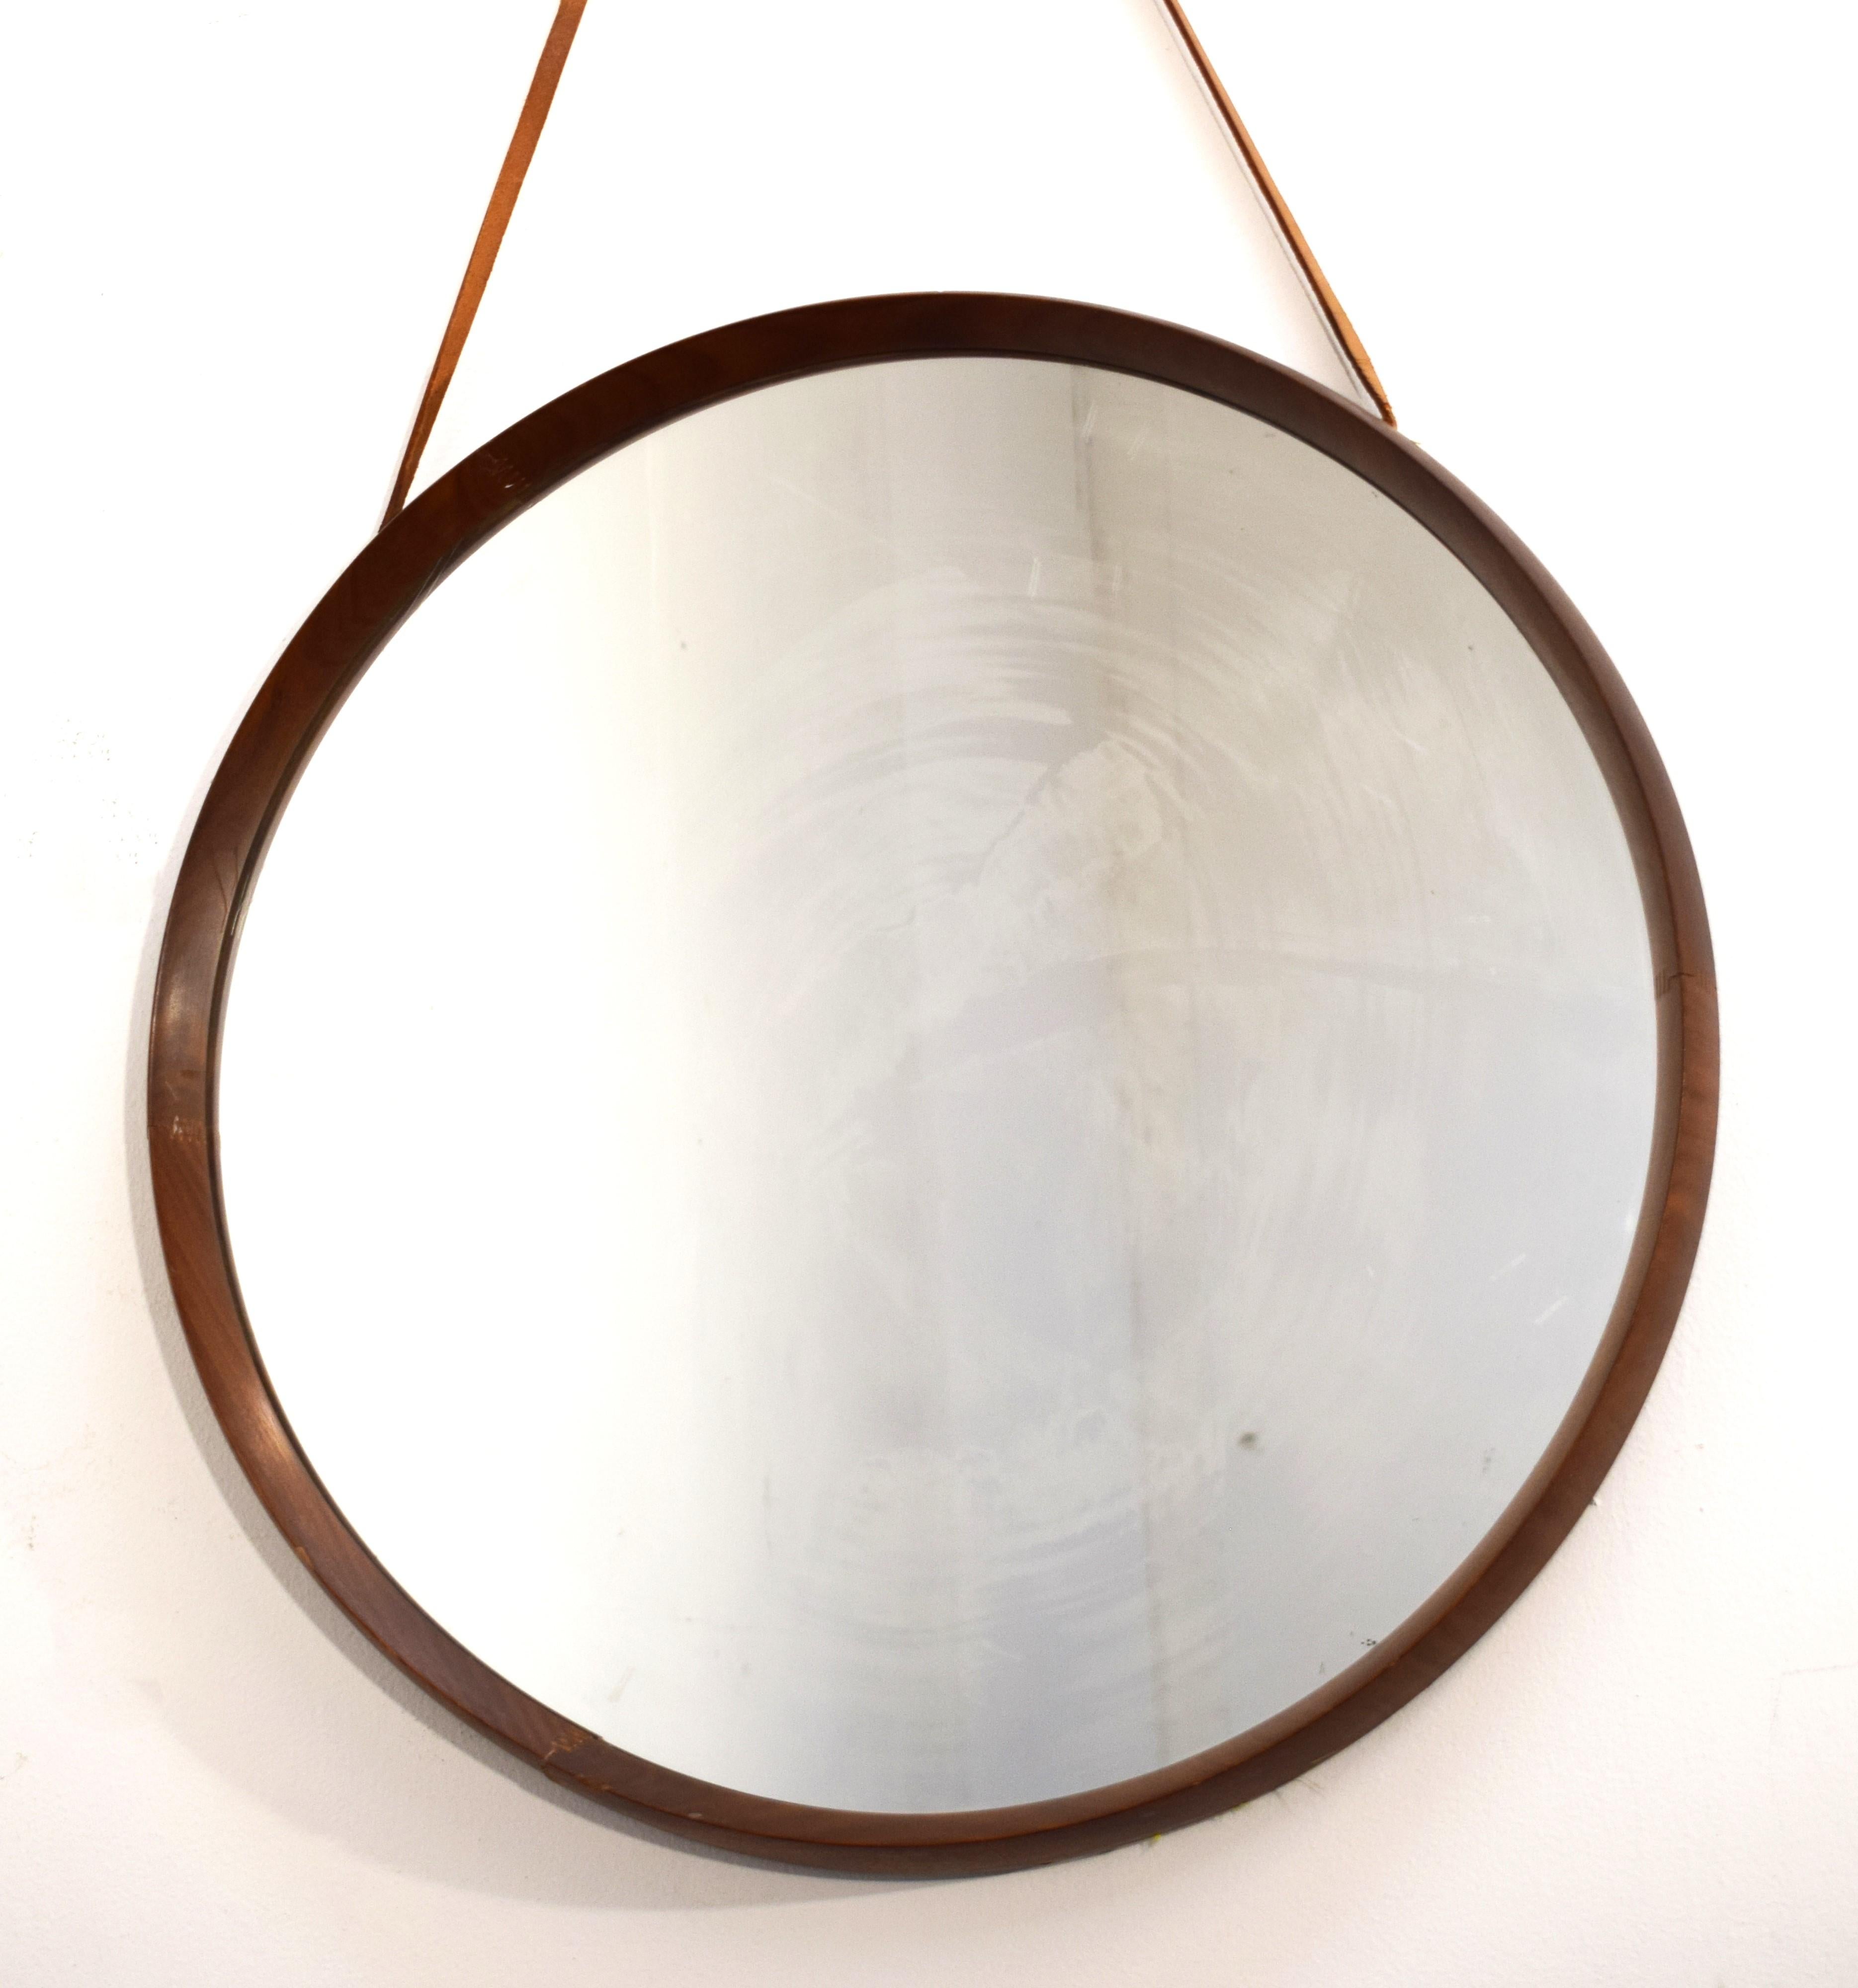 Italian round mirror, 1960s.
Dimensions: H total with lace 100 cm; D= 60 cm; D= 5 cm.